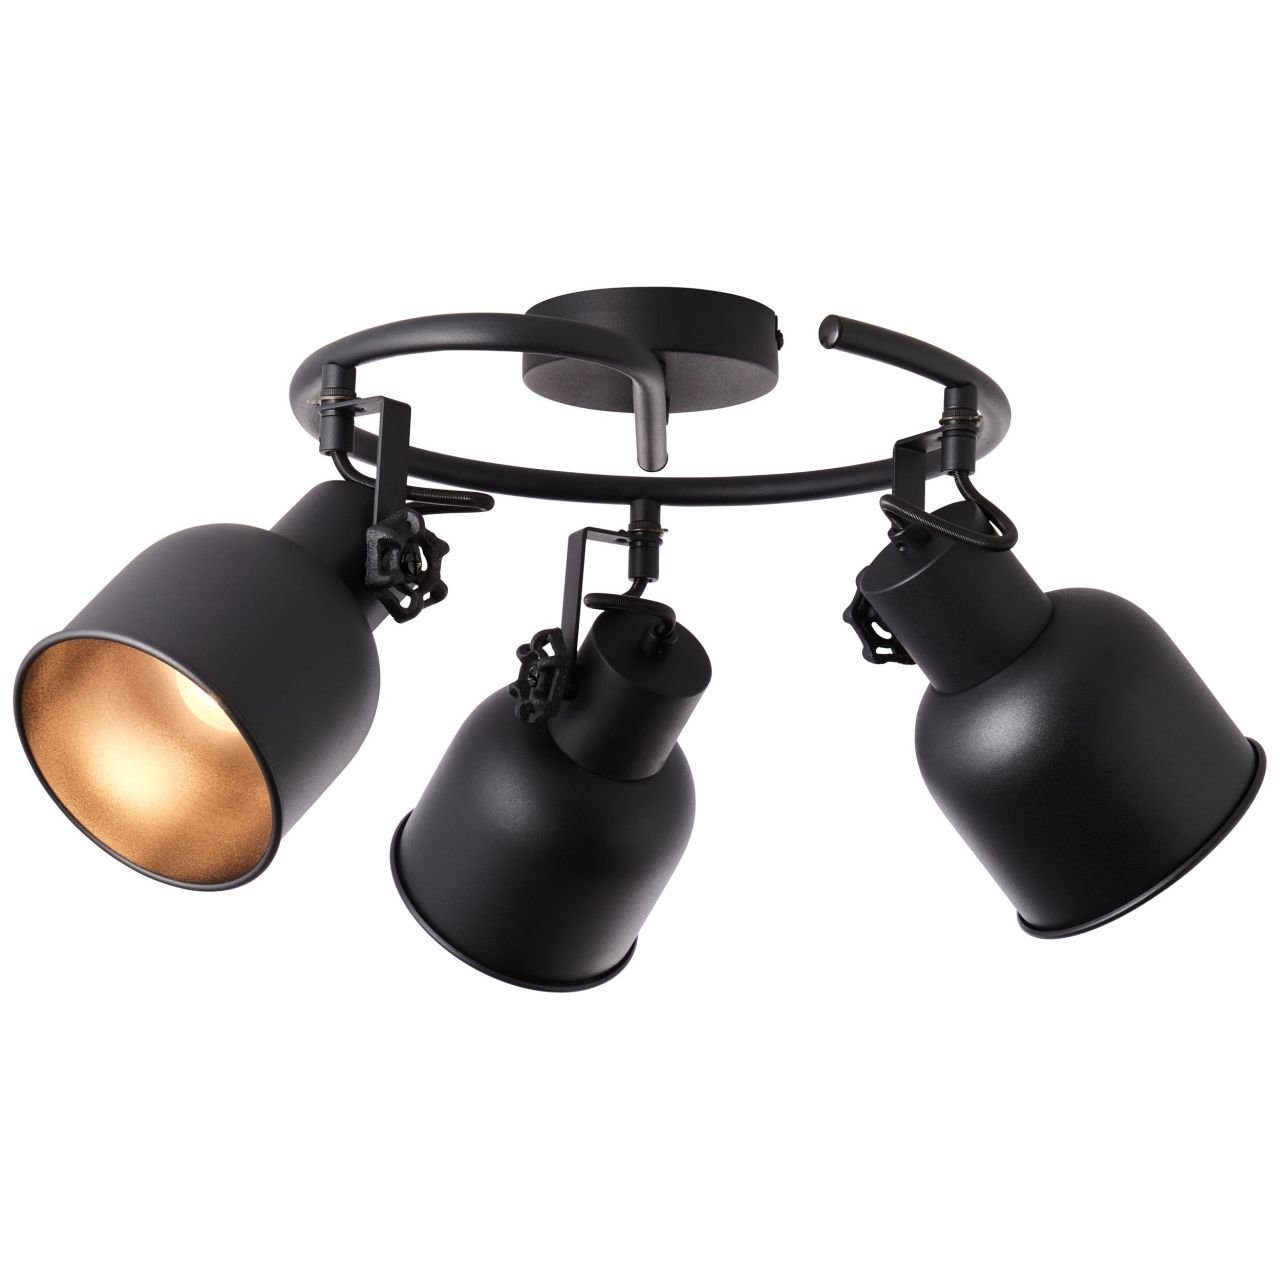 schwarz, Brilliant 3x Spotspirale Rolet 18W,T Lampe, D45, Rolet, sand Deckenleuchte Metall, 3flg E14,